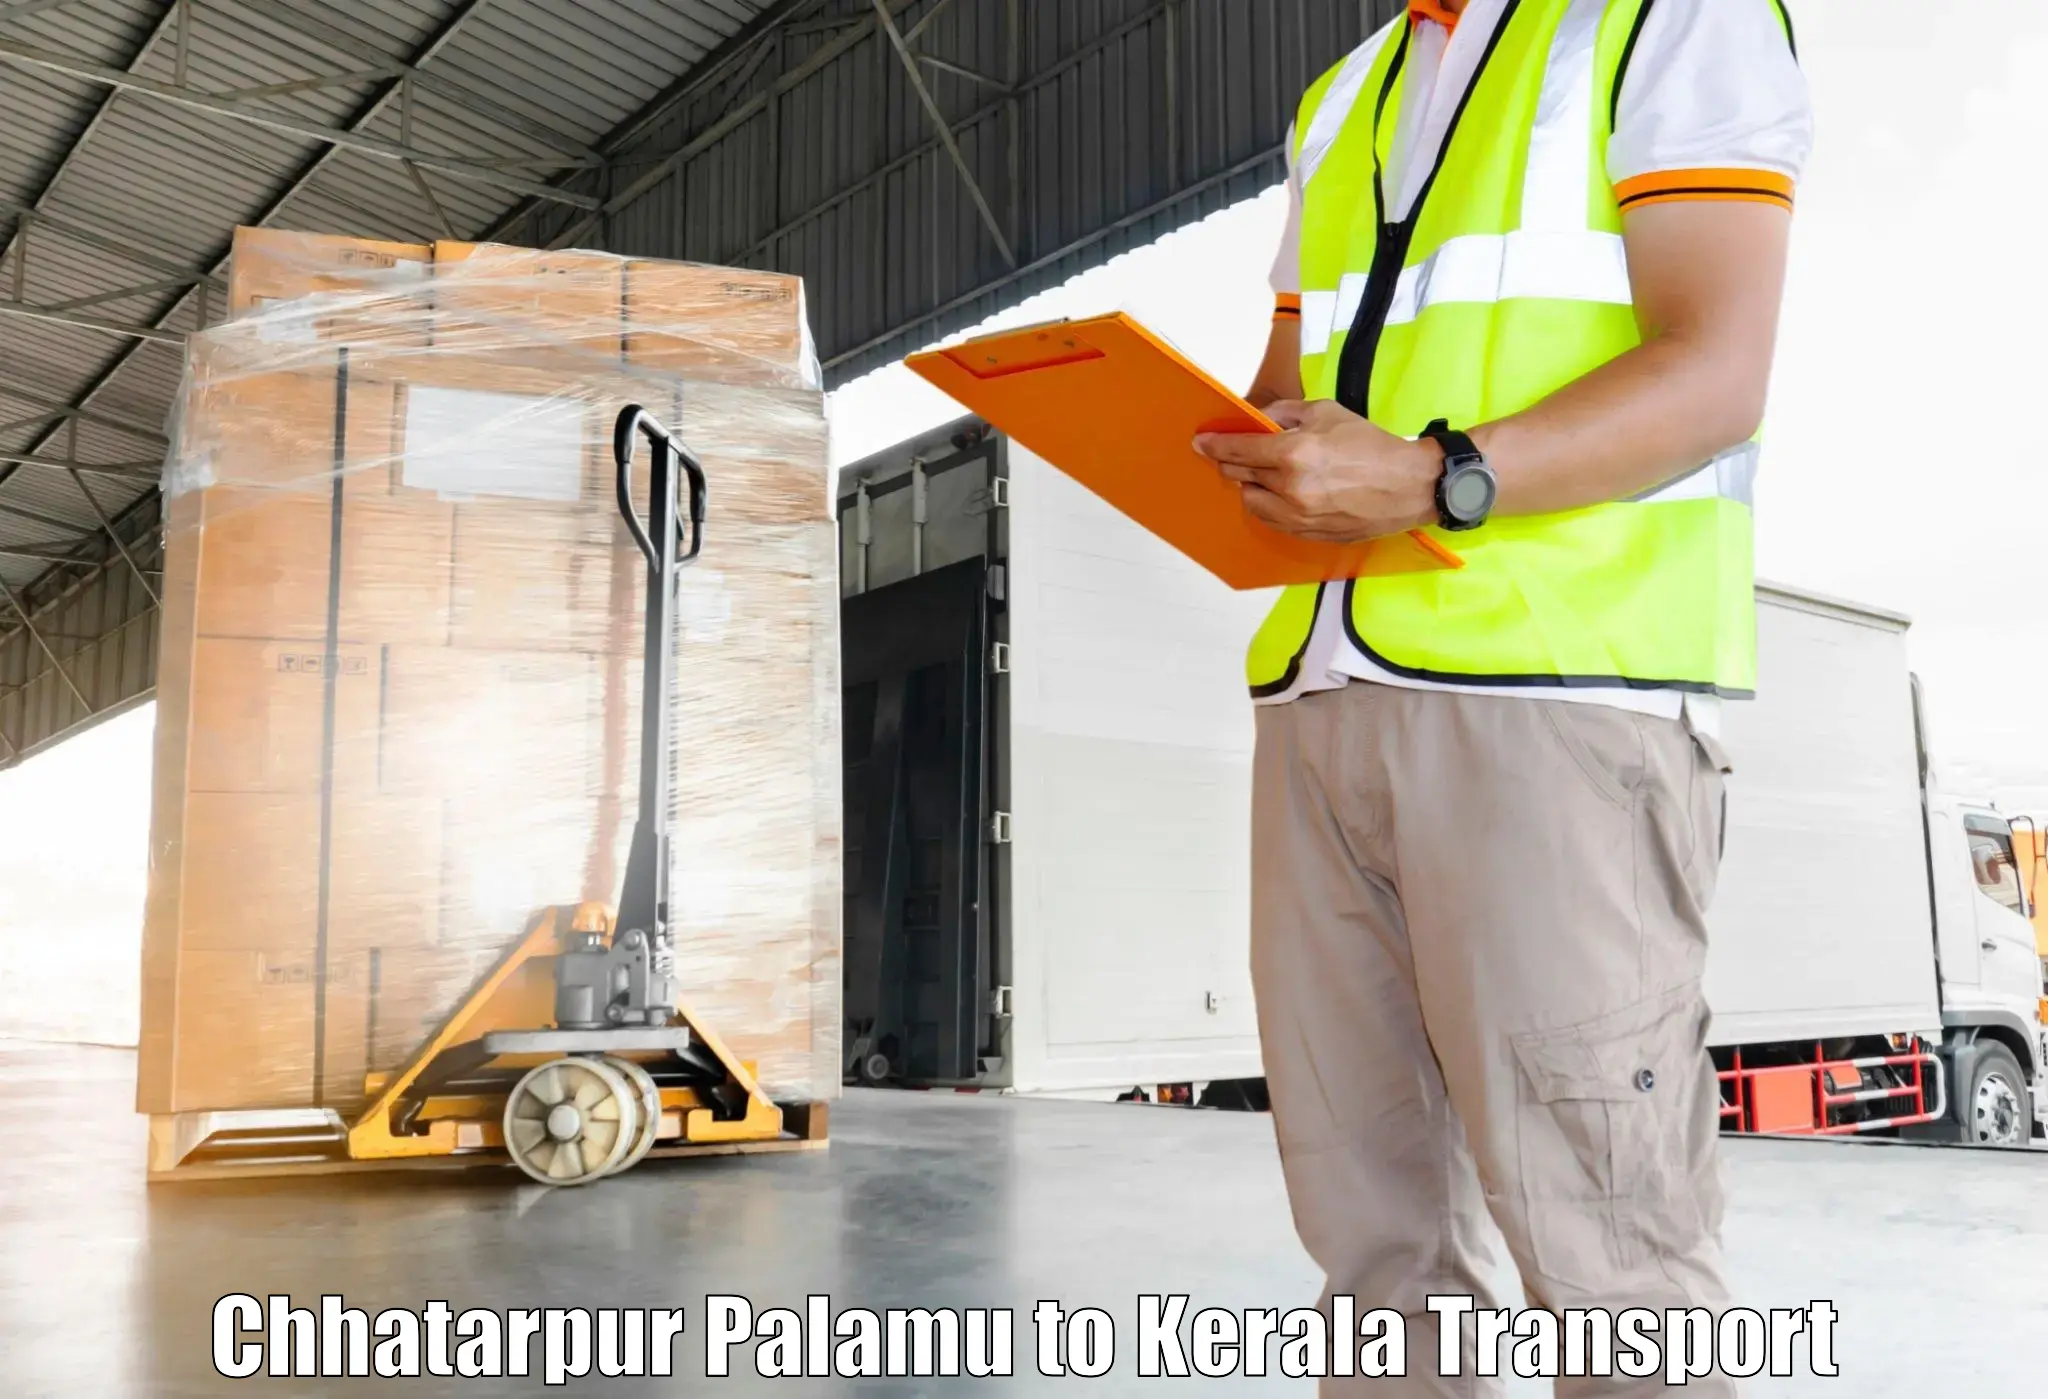 Vehicle transport services in Chhatarpur Palamu to Kerala